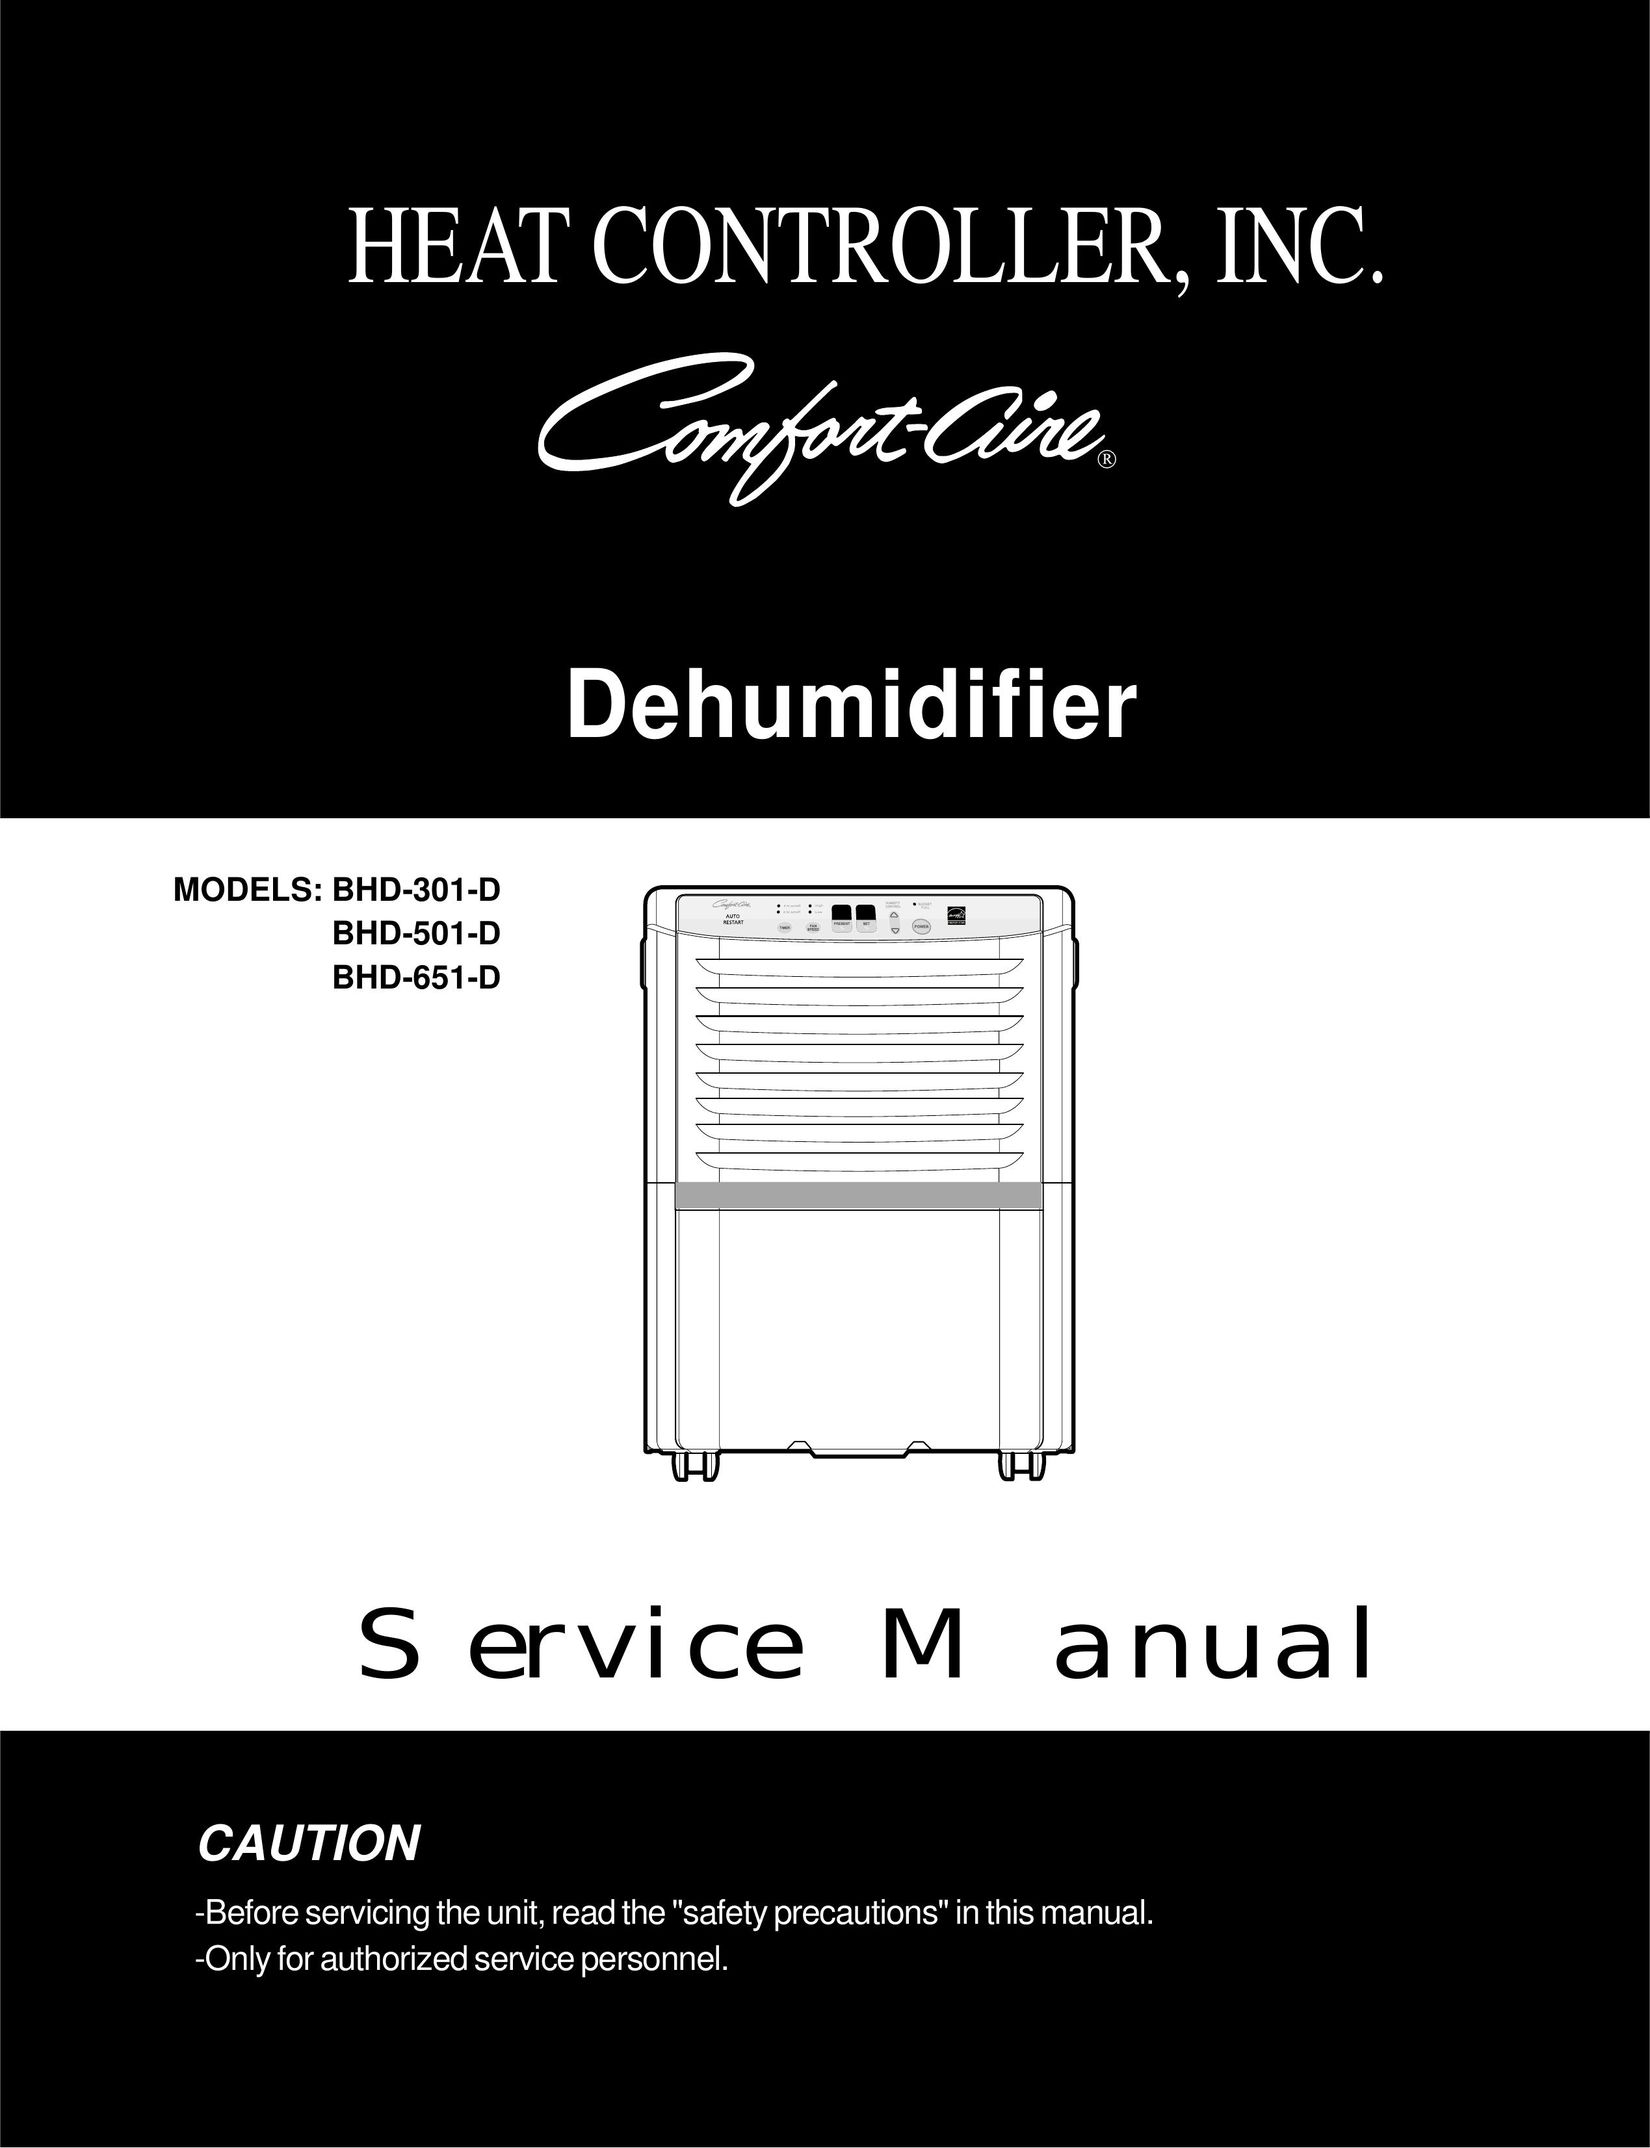 Heat Controller BHD-301-D Dehumidifier User Manual